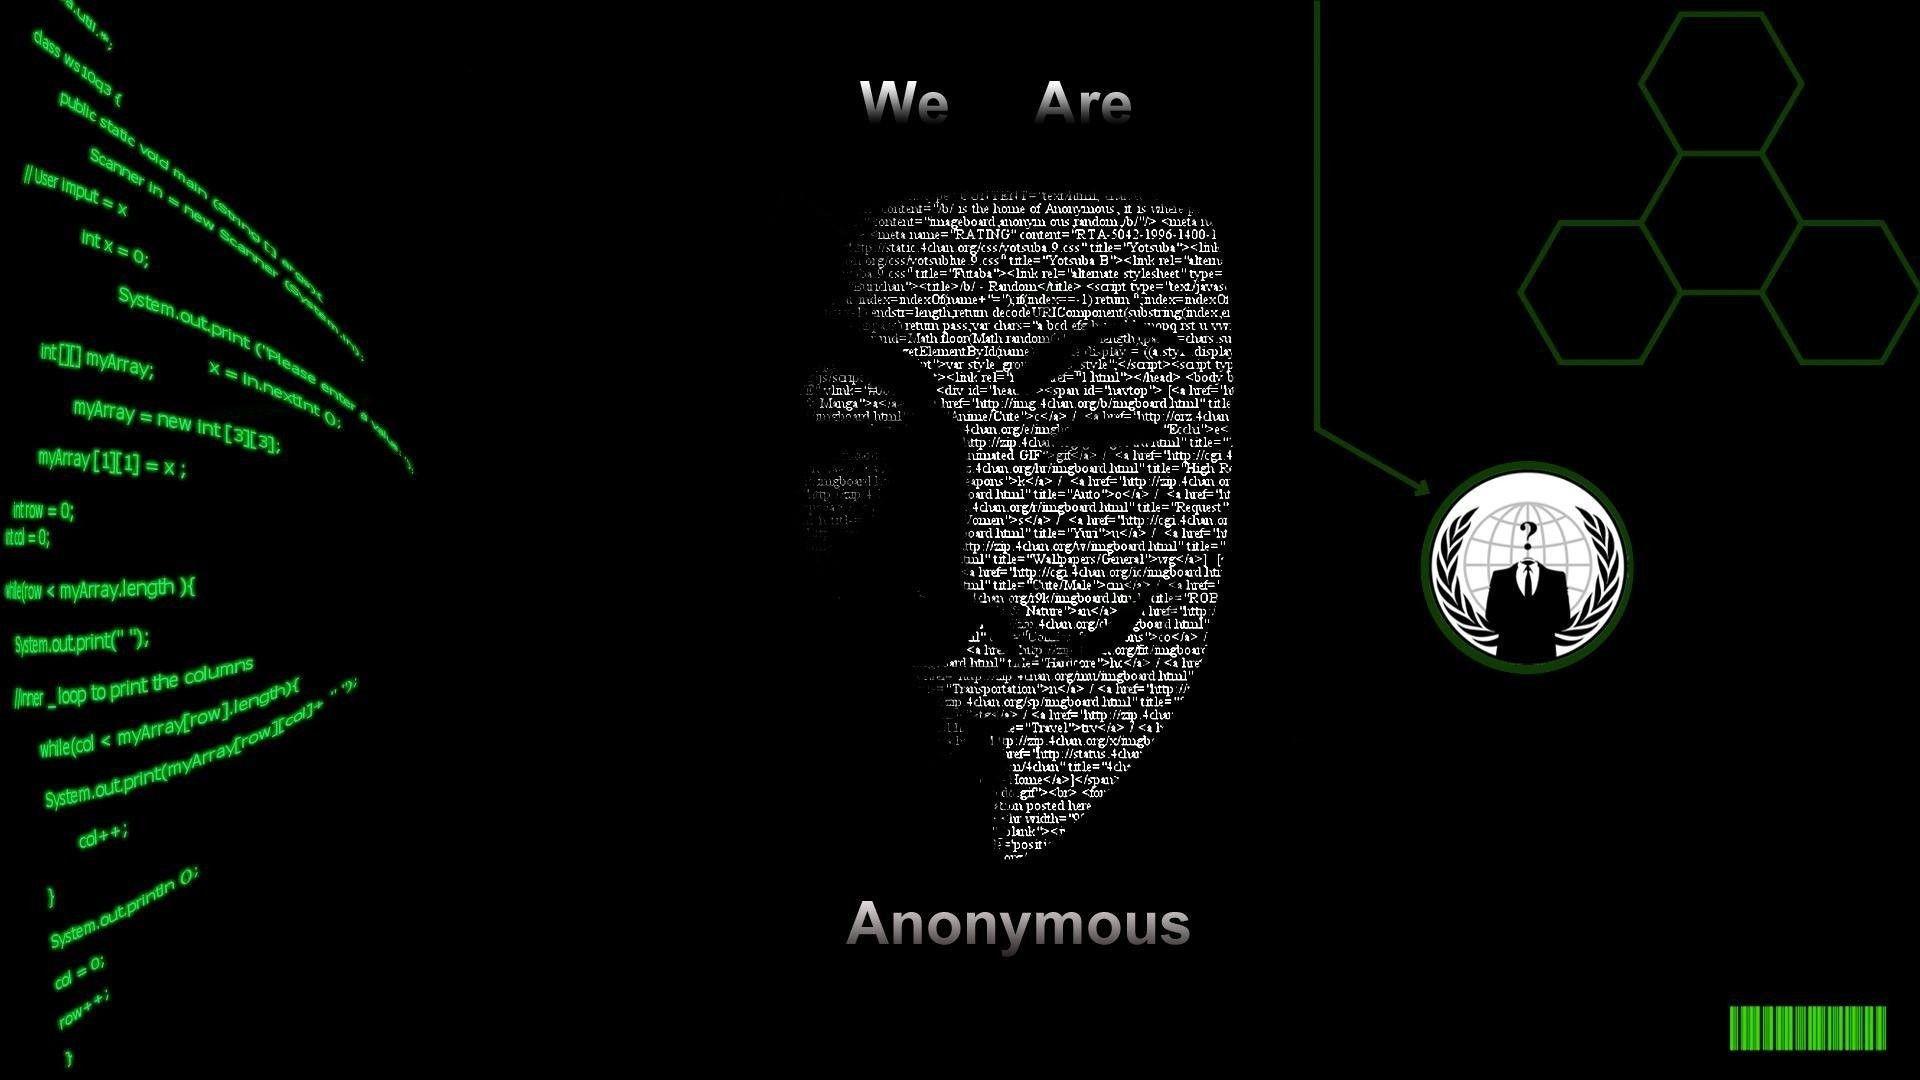 HD Image, Hacking, Virus, Vector, Computer, Binary, Internet Sadic, Hack, Samsung, Windows Desktop Image, Anonymous, Peace, Dark, Anarchy